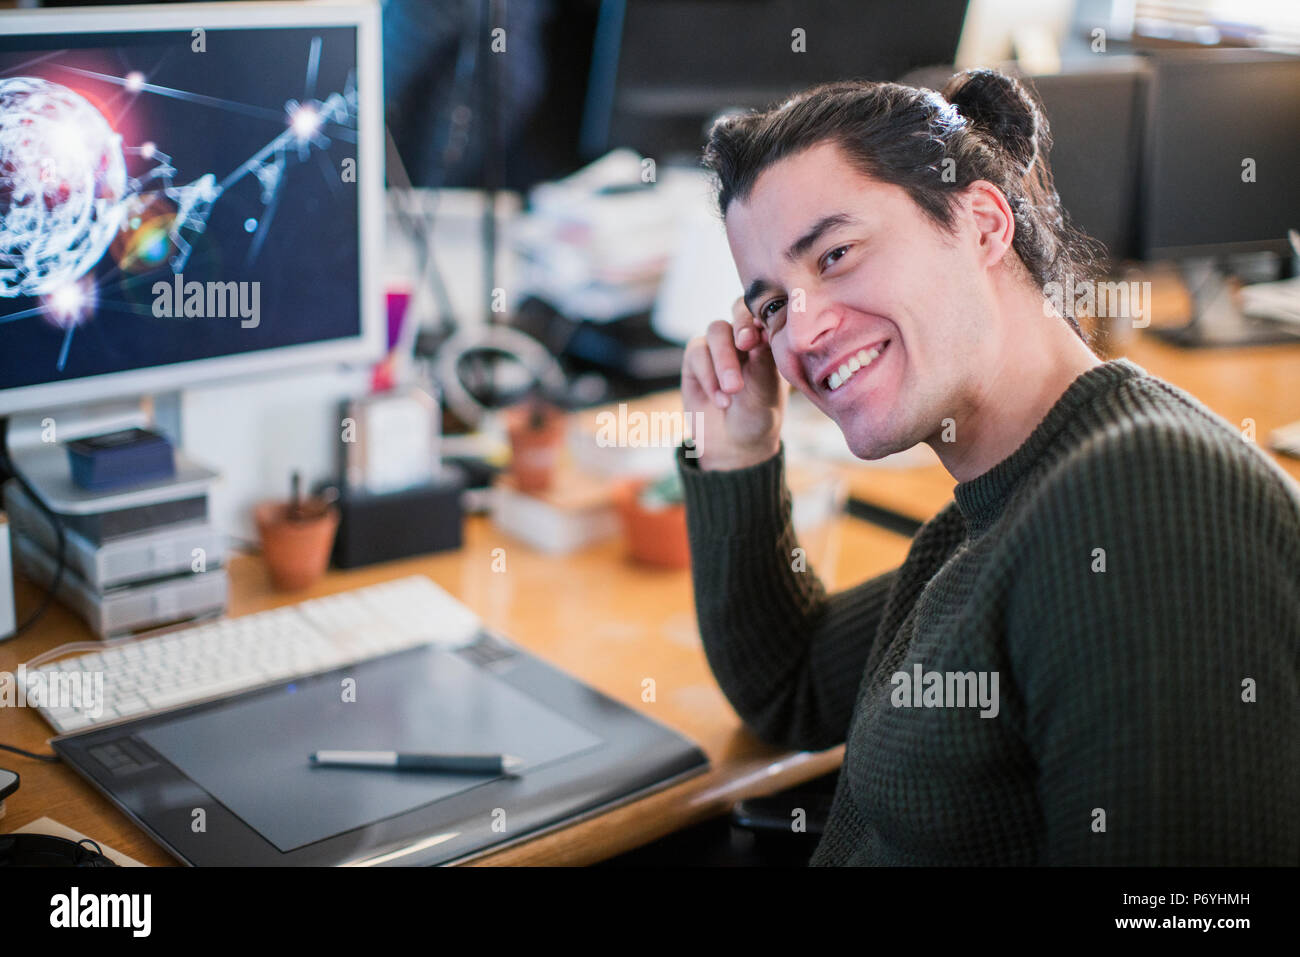 Portrait smiling, confident male graphic designer working at desk Stock Photo